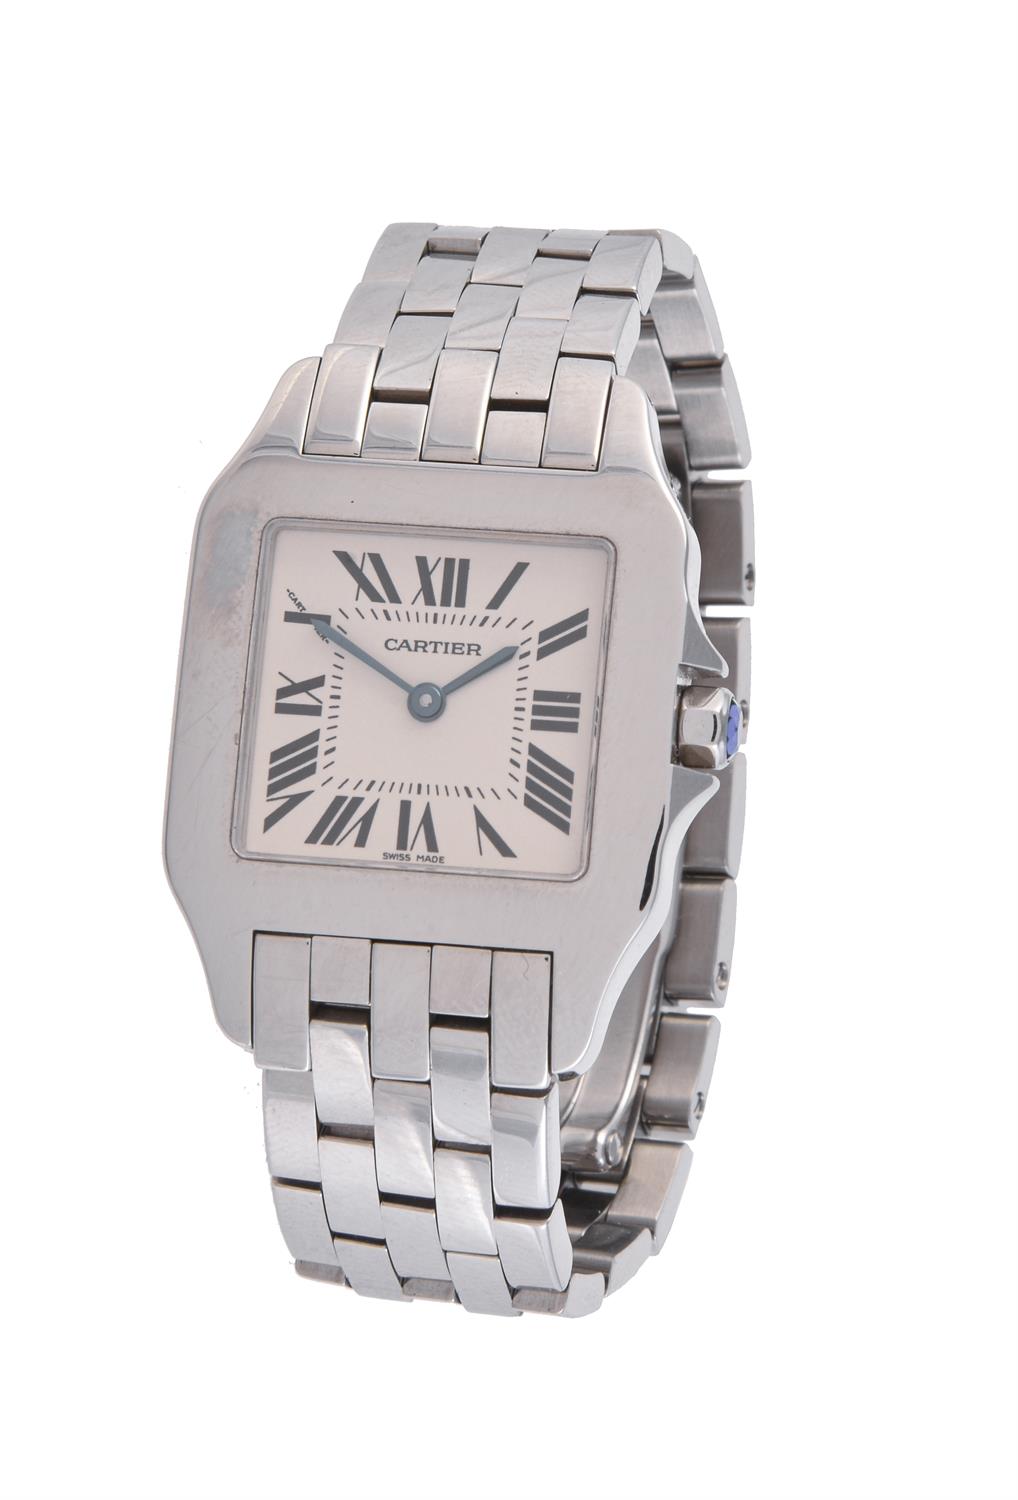 Cartier, Santos Demoiselle, Ref. 2701, a mid-size stainless steel bracelet watch